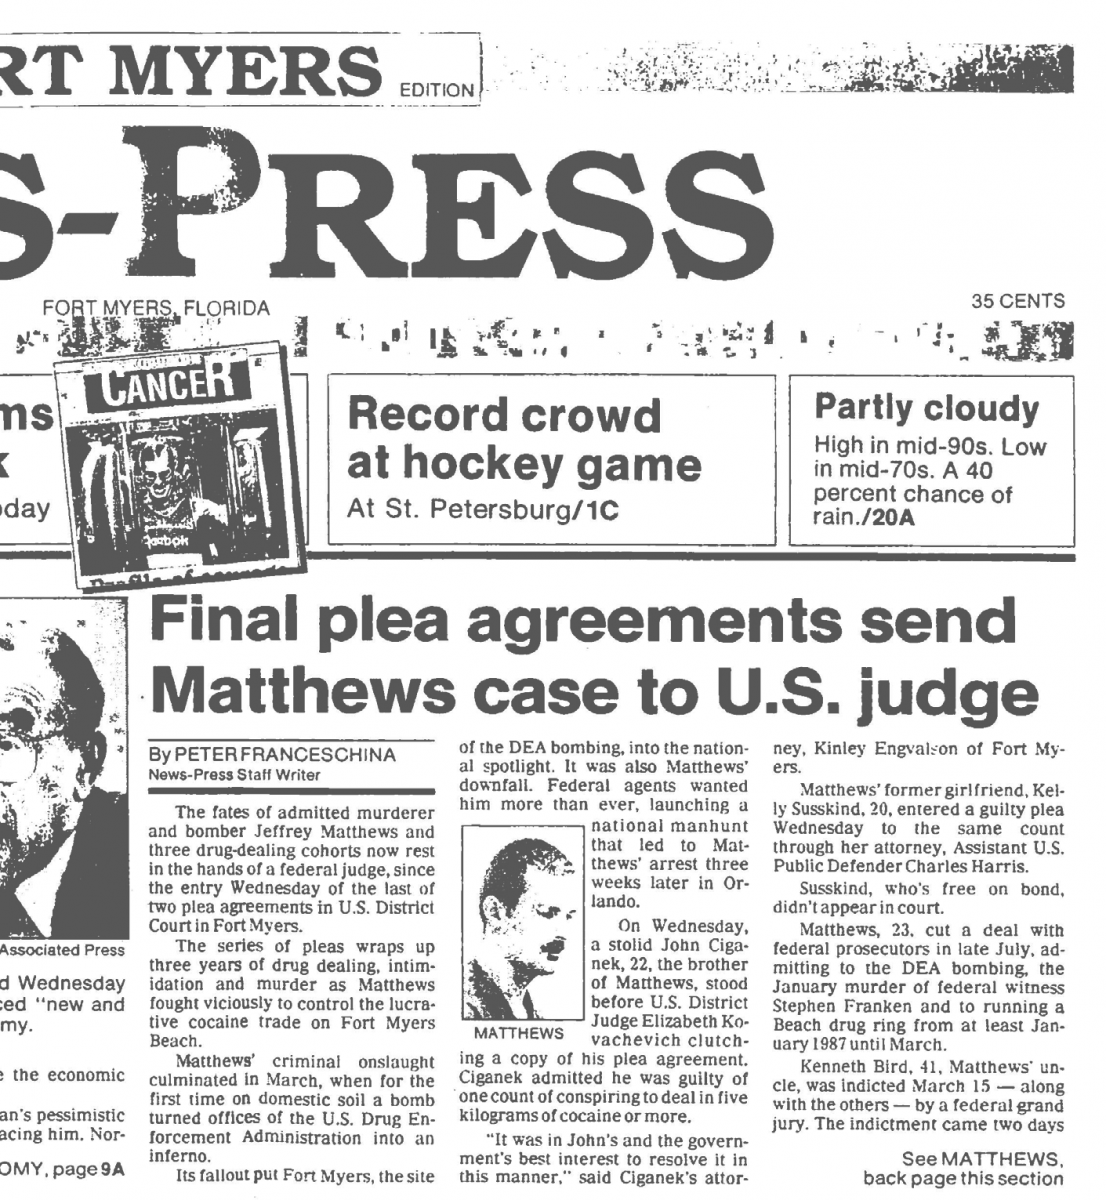 HEADLINE: Final plea agreements send Matthews case to United States judge